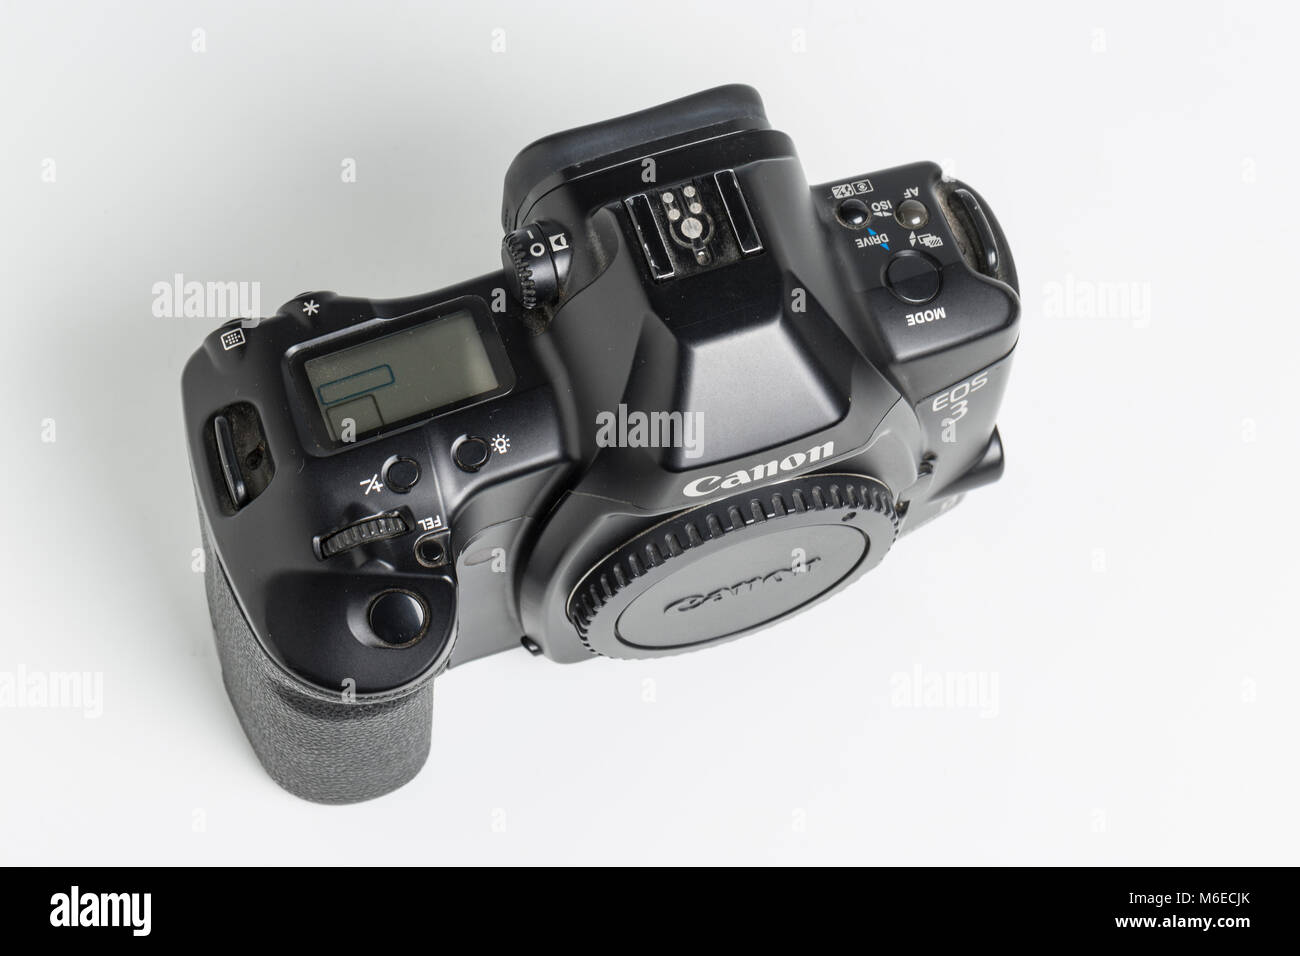 Canon EOS 3 semi-professionelle SLR Kamera mit eye-gesteuert. Eingeführt 1998. Stockfoto